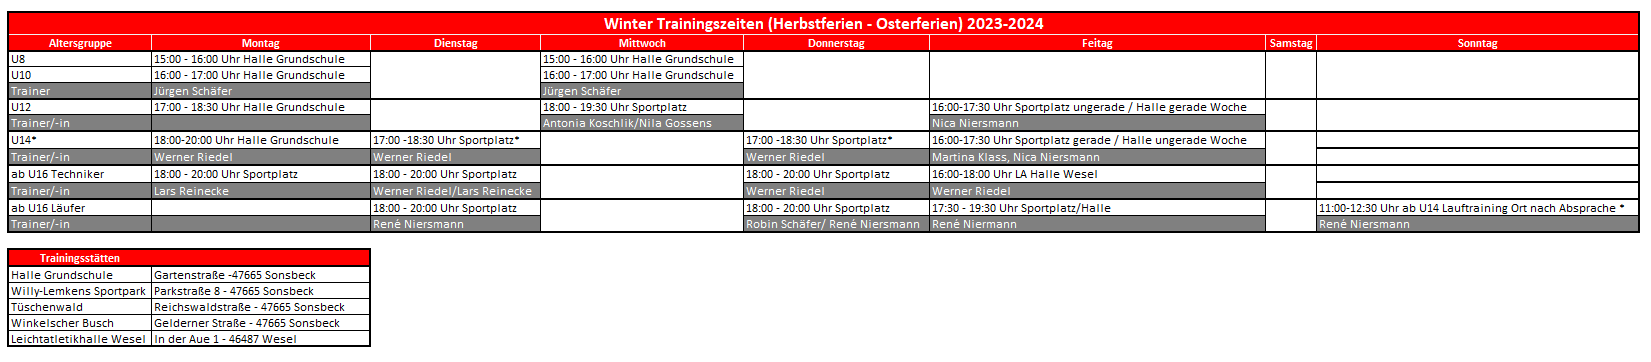 Trainingszeiten 2023-2024